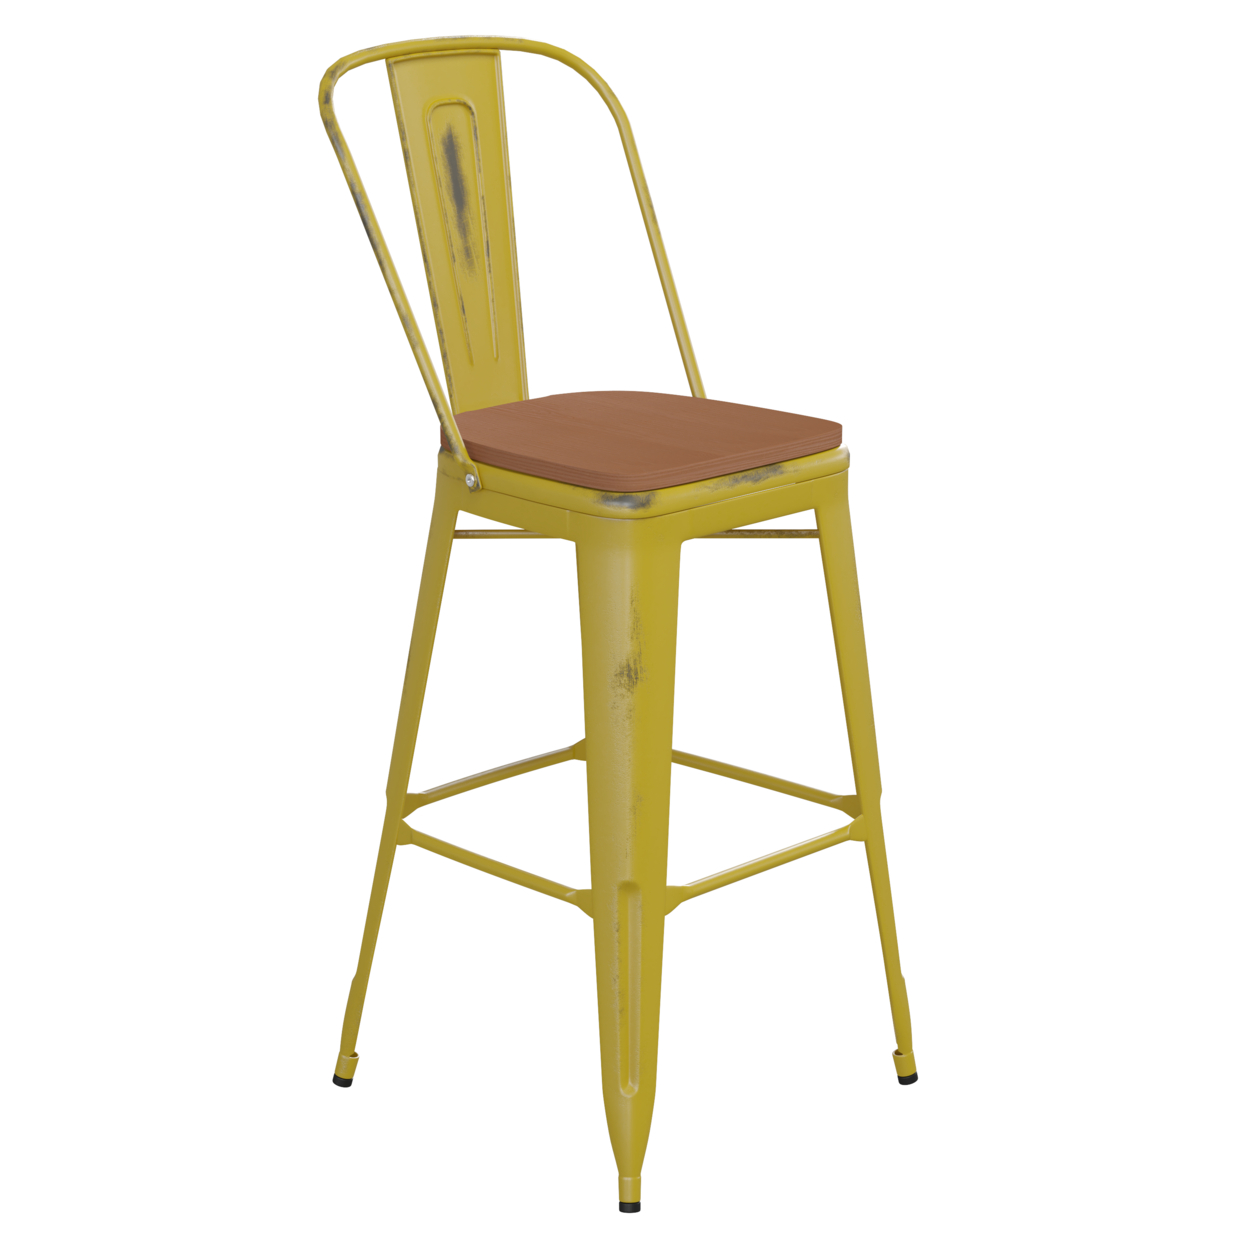 30 Inch Metal Bar Stool, Curved Open Back, Sleek Wood Seat, Yellow